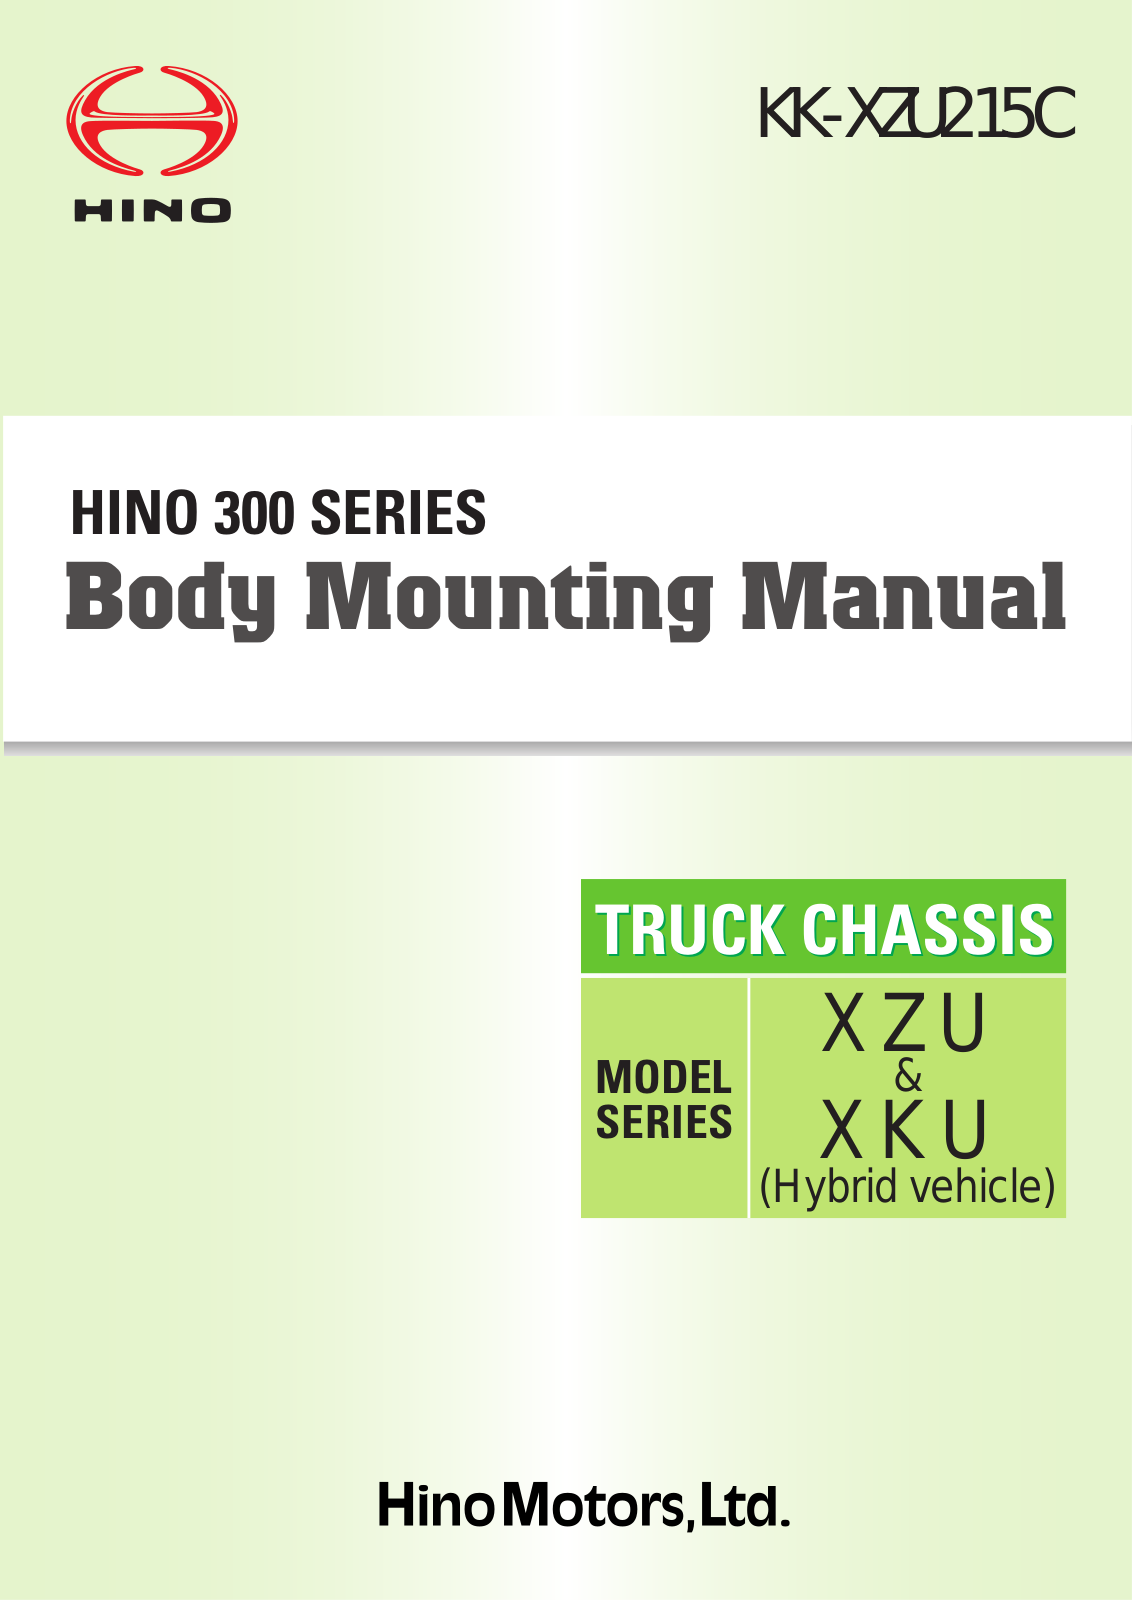 Hino KK-XZU215C Service Manual